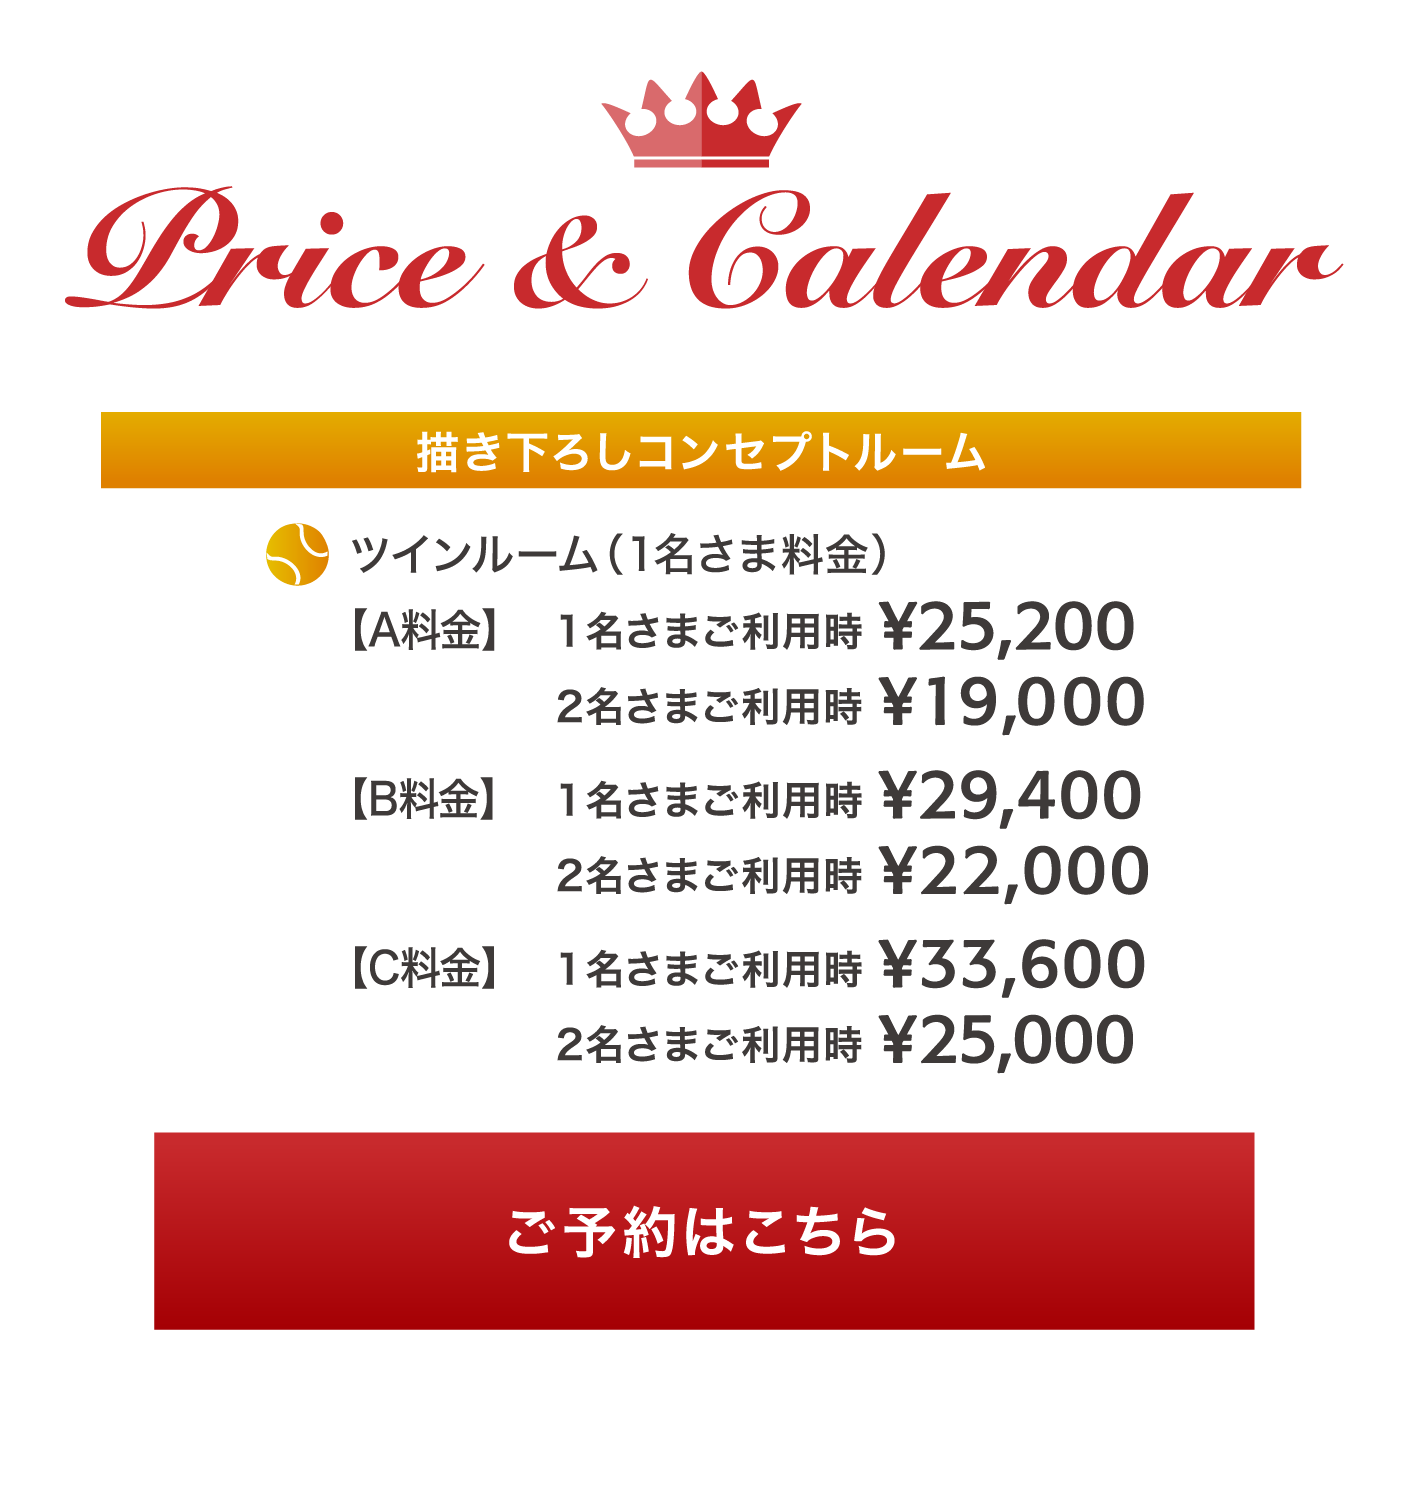 Price & Calendar